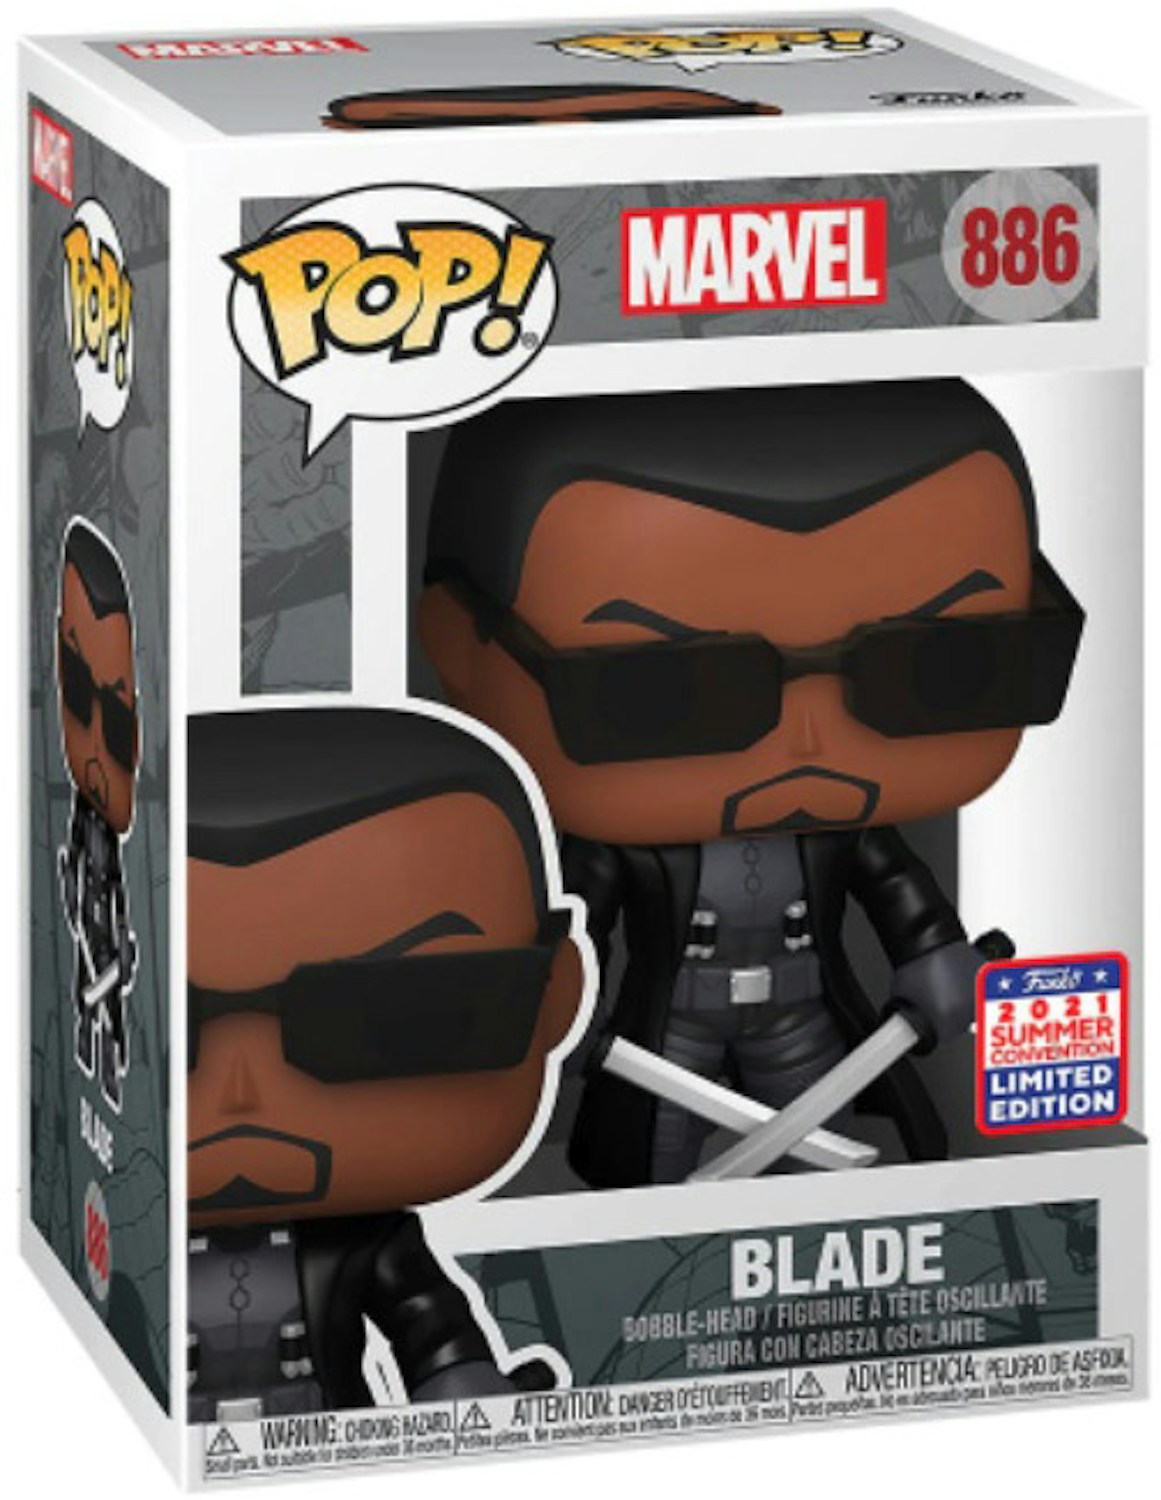 Funko Pop! Marvel Blade 2021 Summer Convention Exclusive Figure 886